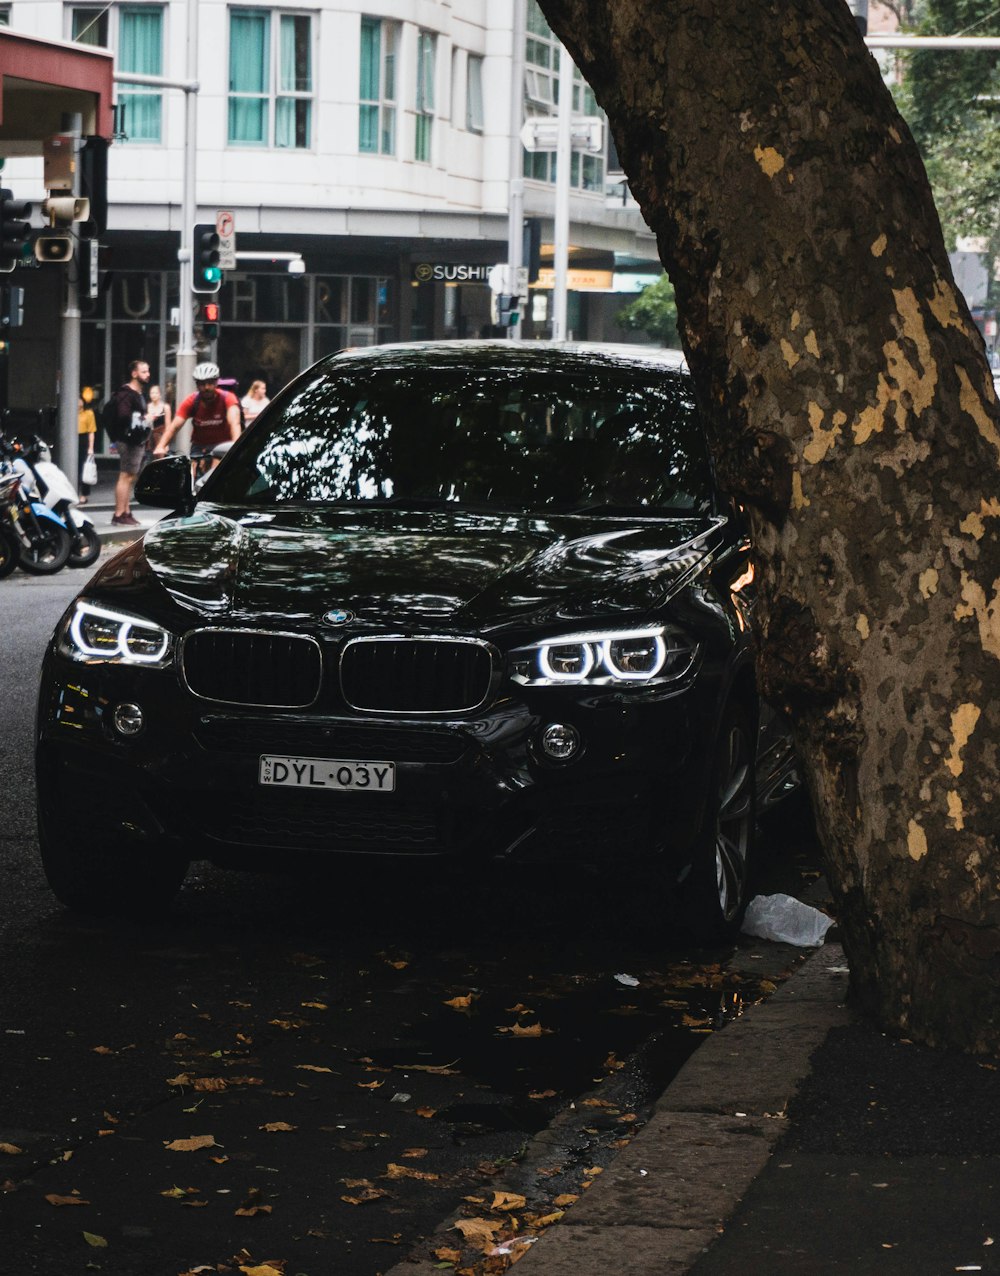 black BMW SUV parked on street near the tree